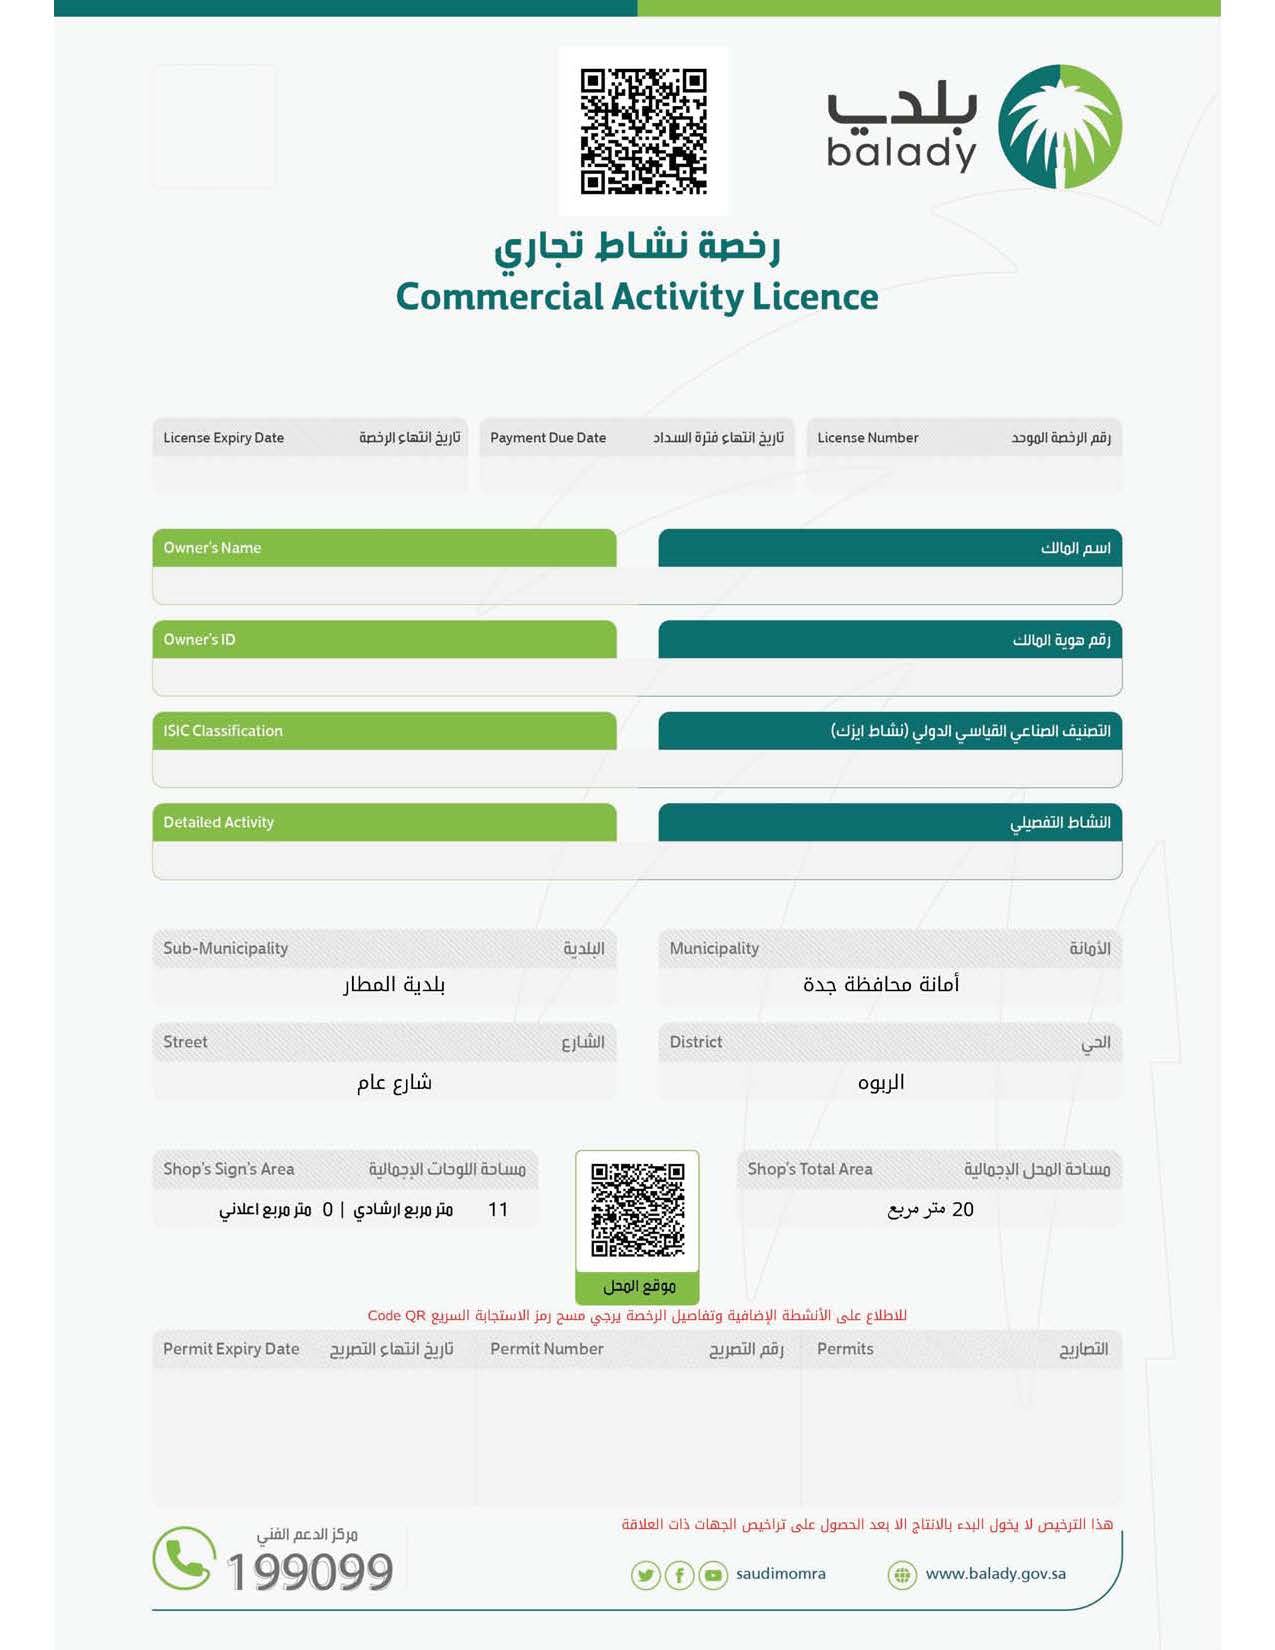 البلديات Page 20 One of the leading companies and a significant number in all its fields